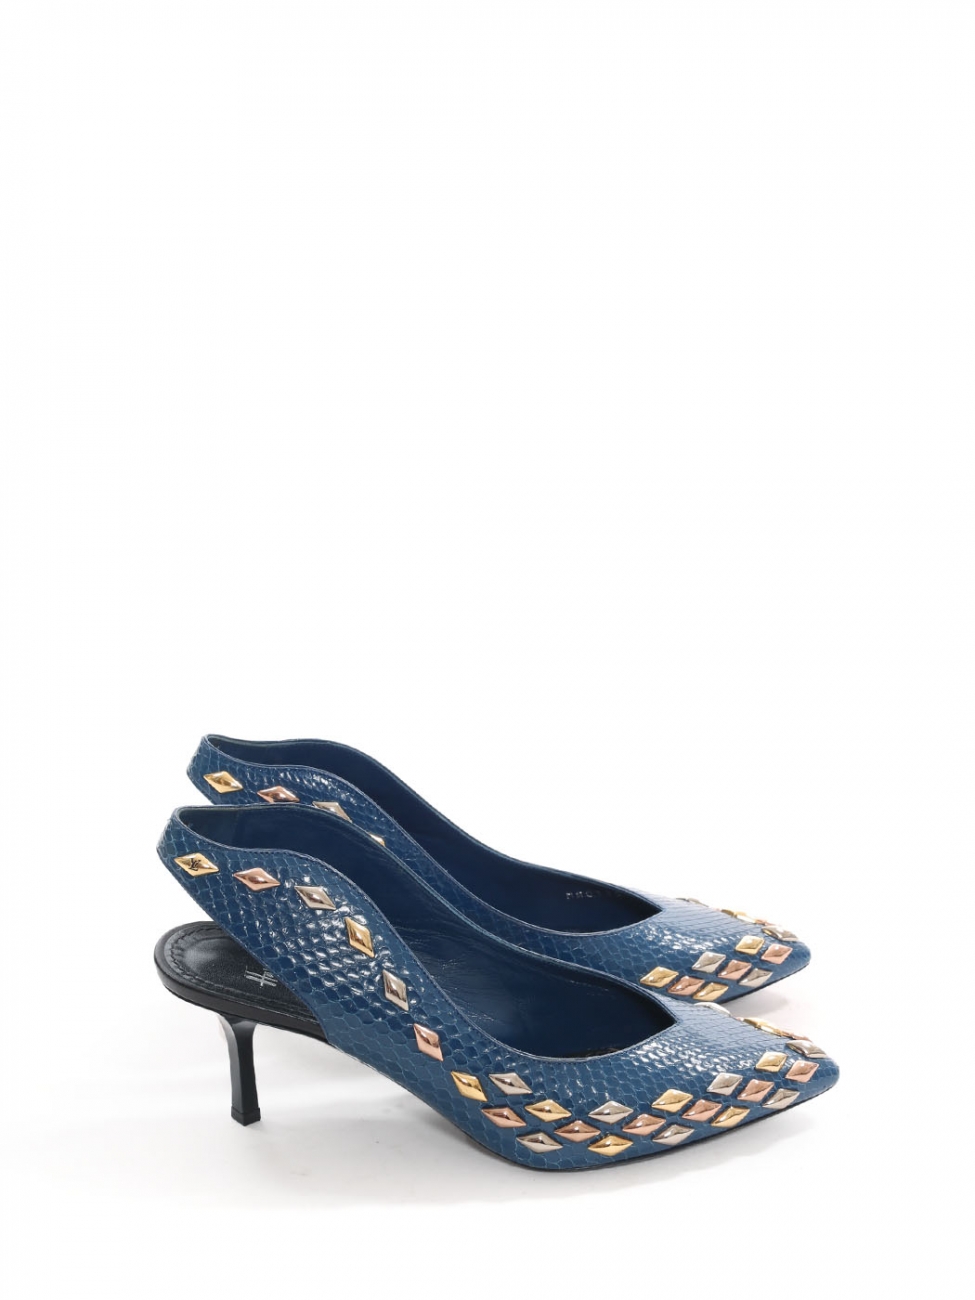 stiletto lv heels